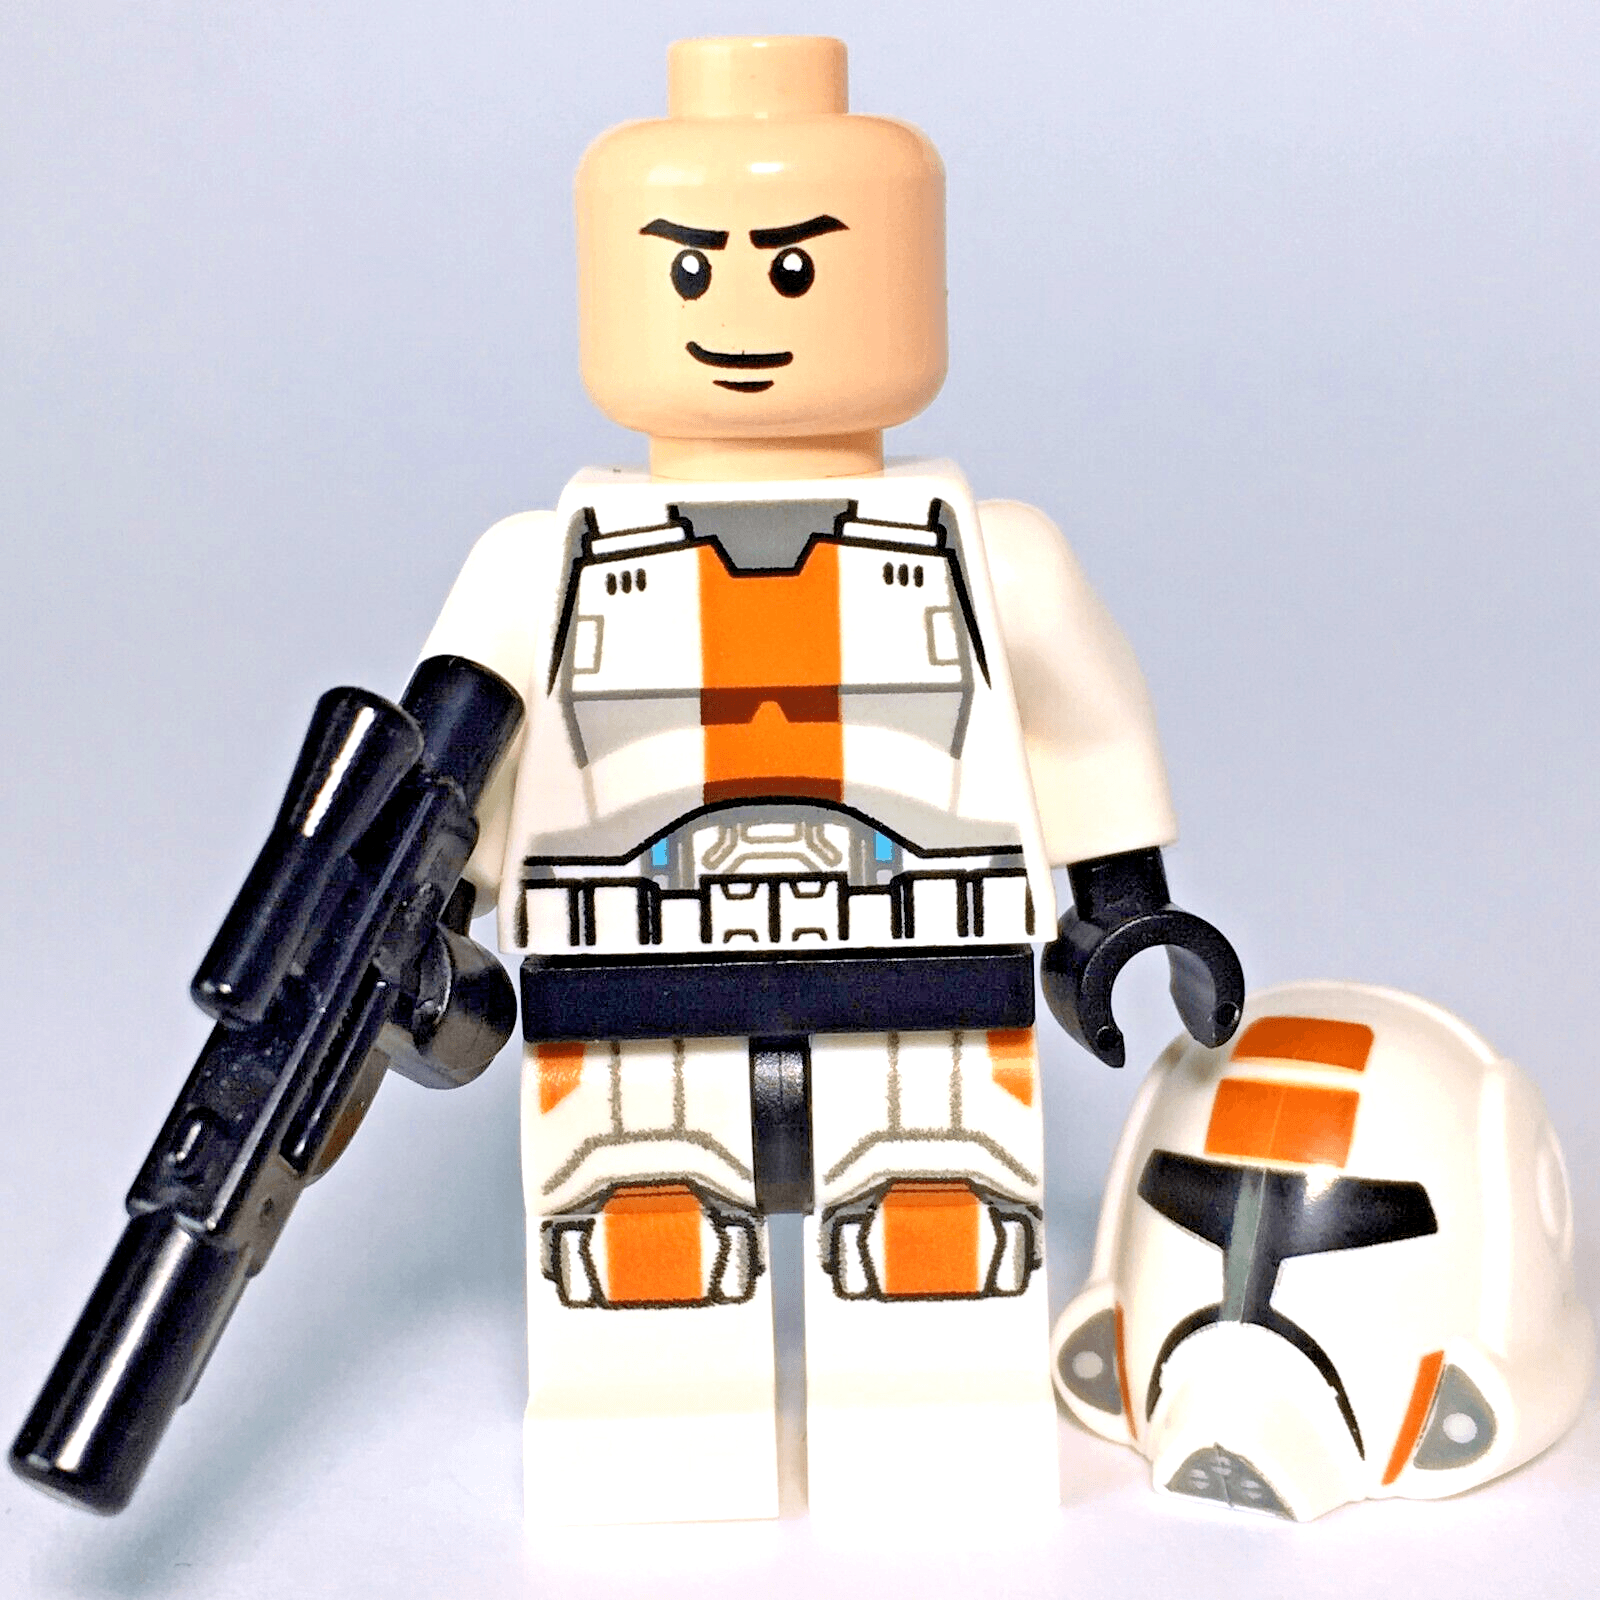 LEGO Star Wars Republic Trooper Minifigure The Old Republic 75001 sw0440 New - Bricks & Figures